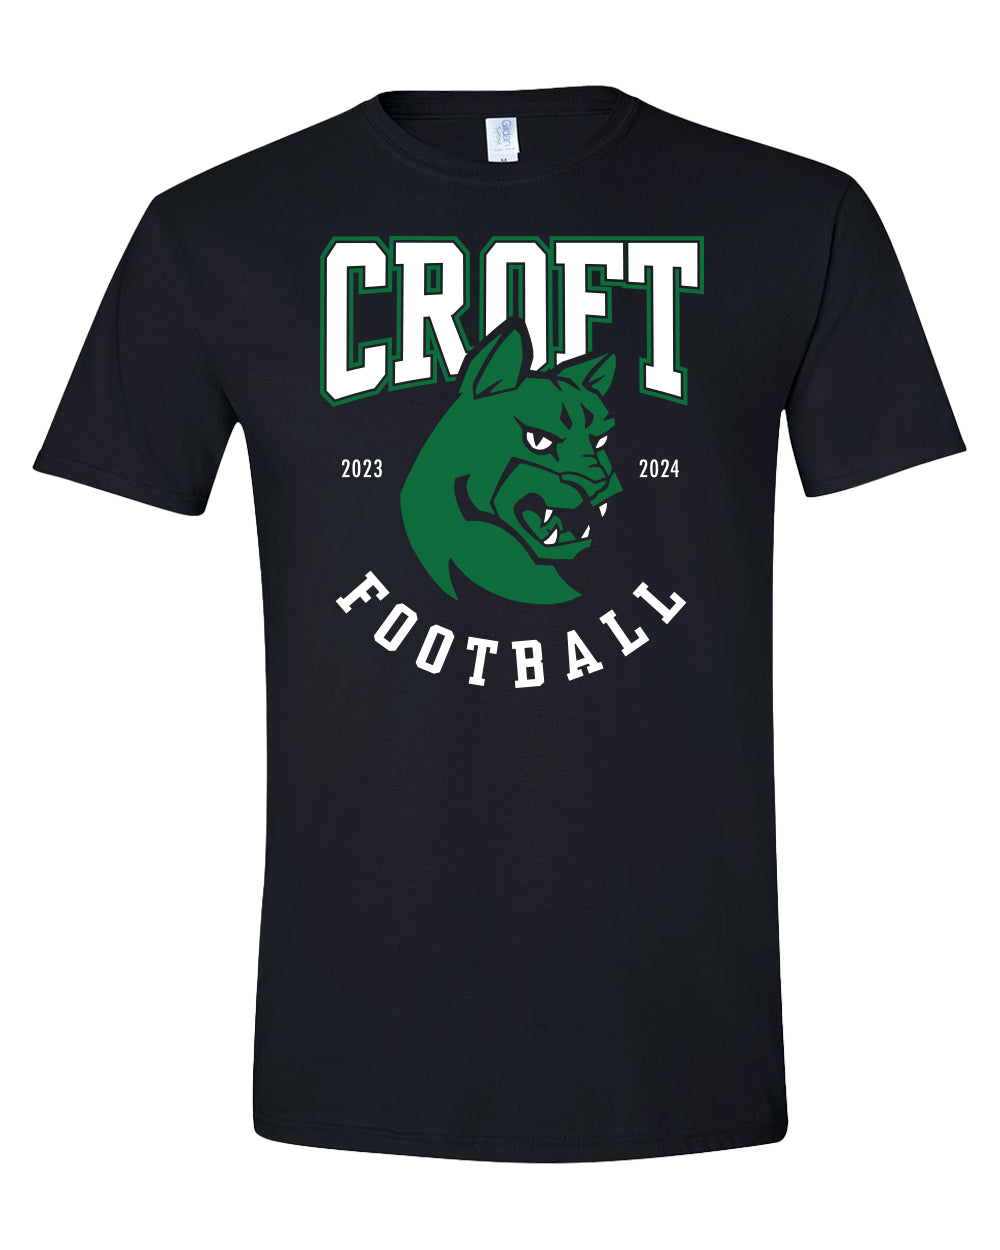 Croft Football T-shirt